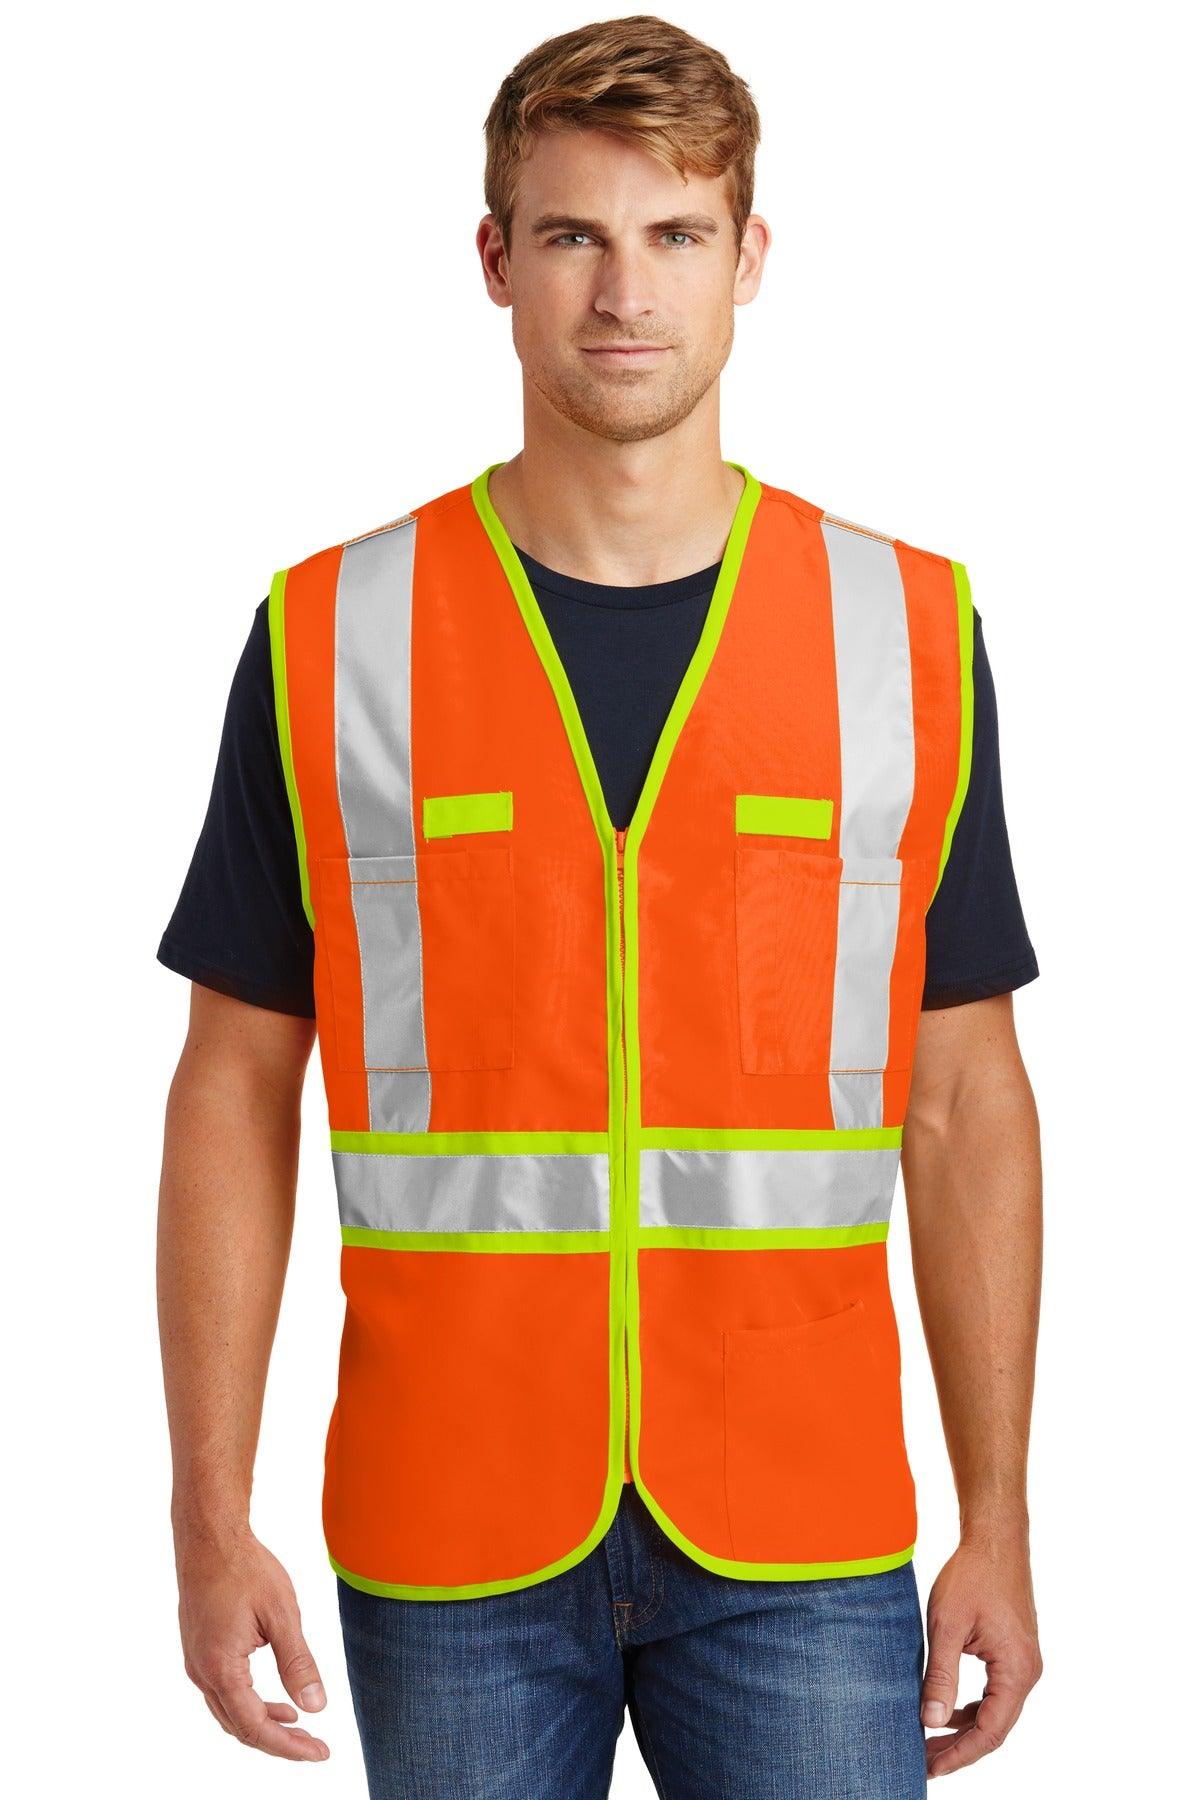 CornerStone - ANSI 107 Class 2 Dual-Color Safety Vest. CSV407 - Dresses Max